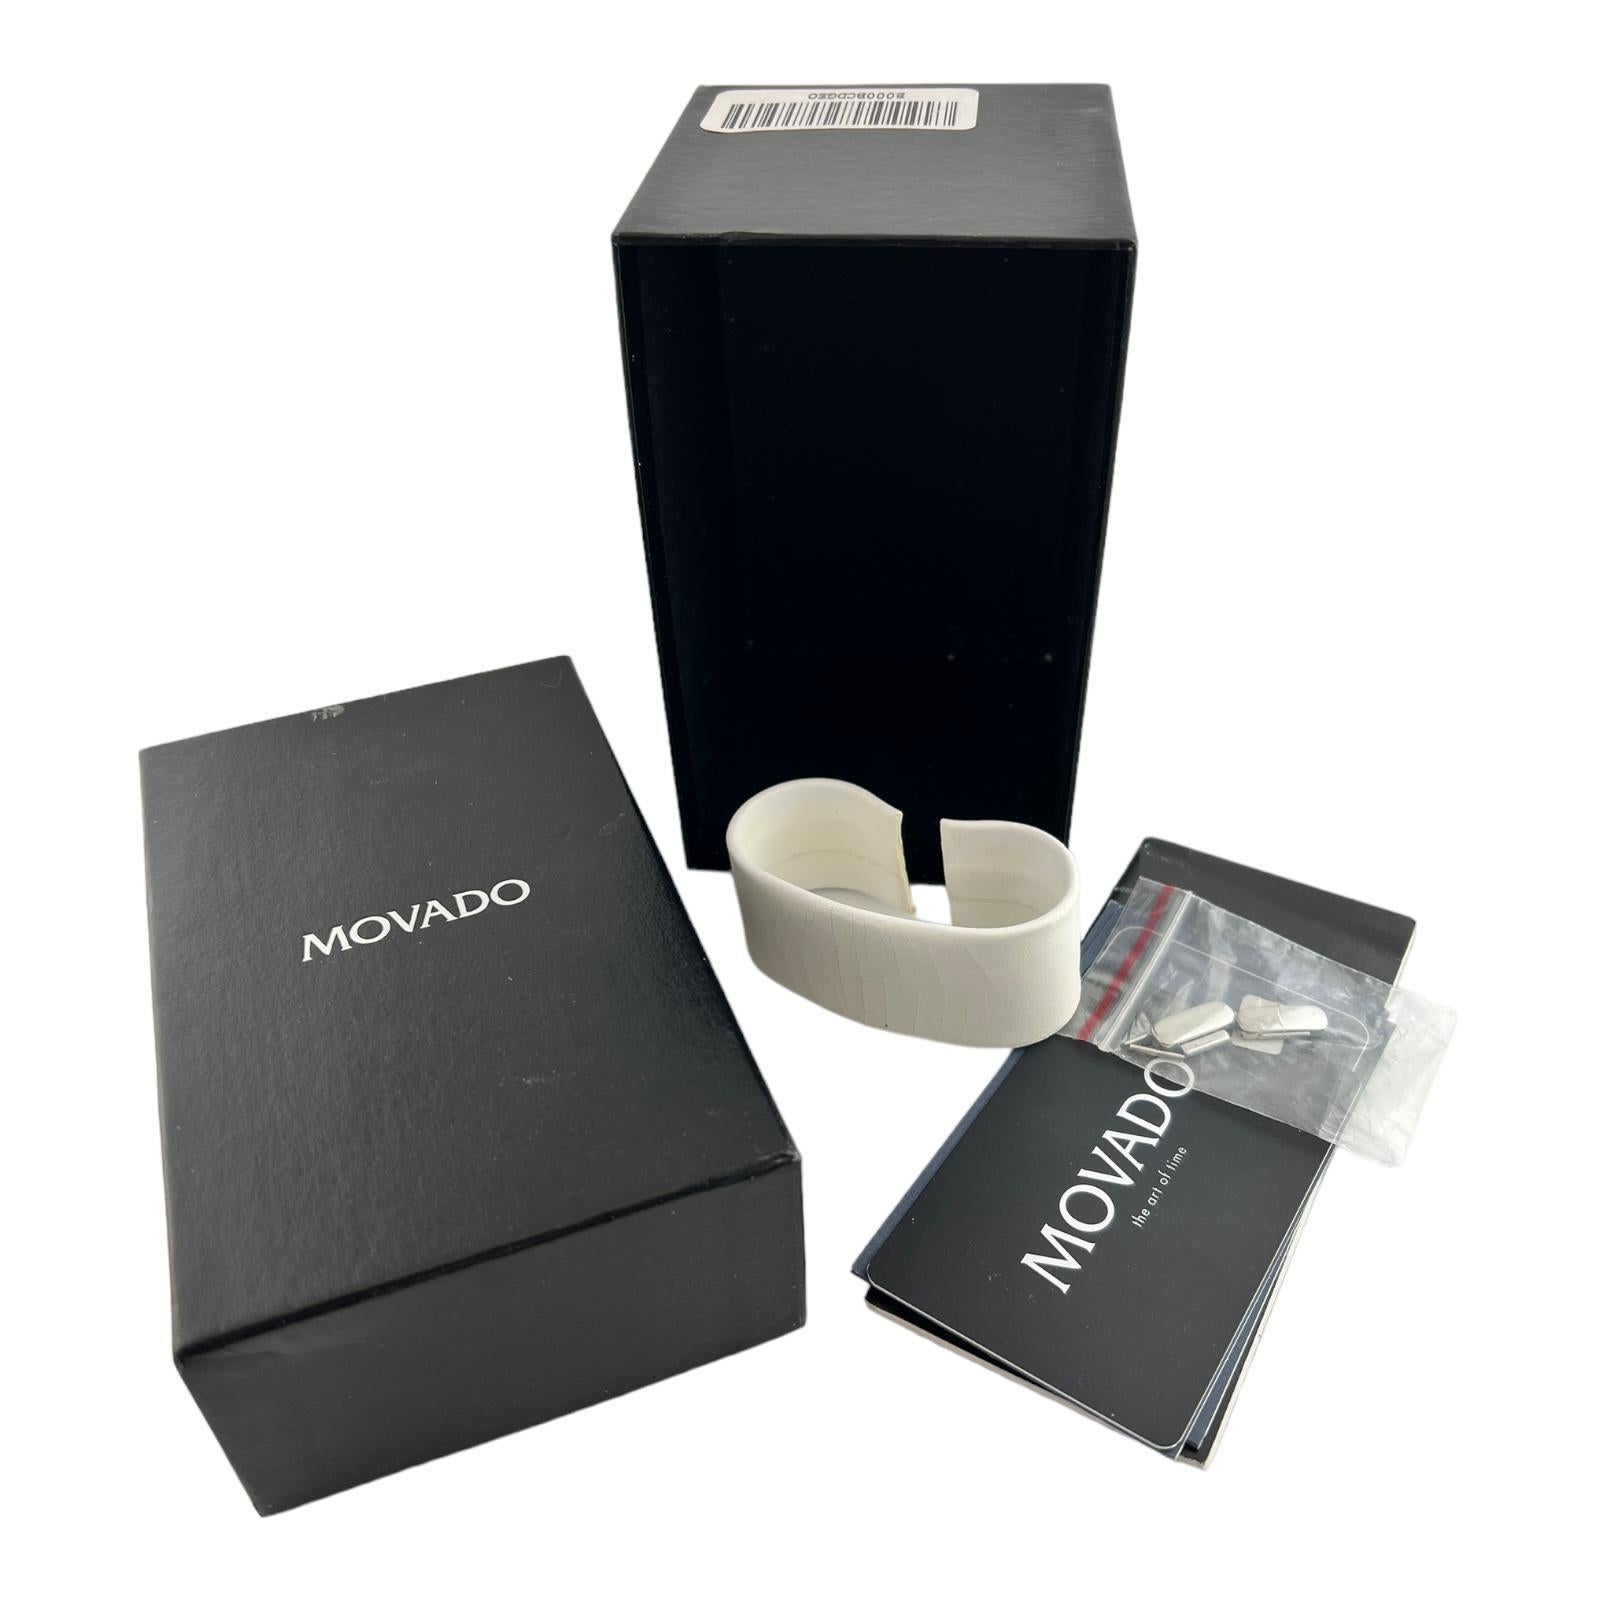 Movado Dolce Ladies Bracelet Watch 84 G2 1330 box #15796 For Sale 4